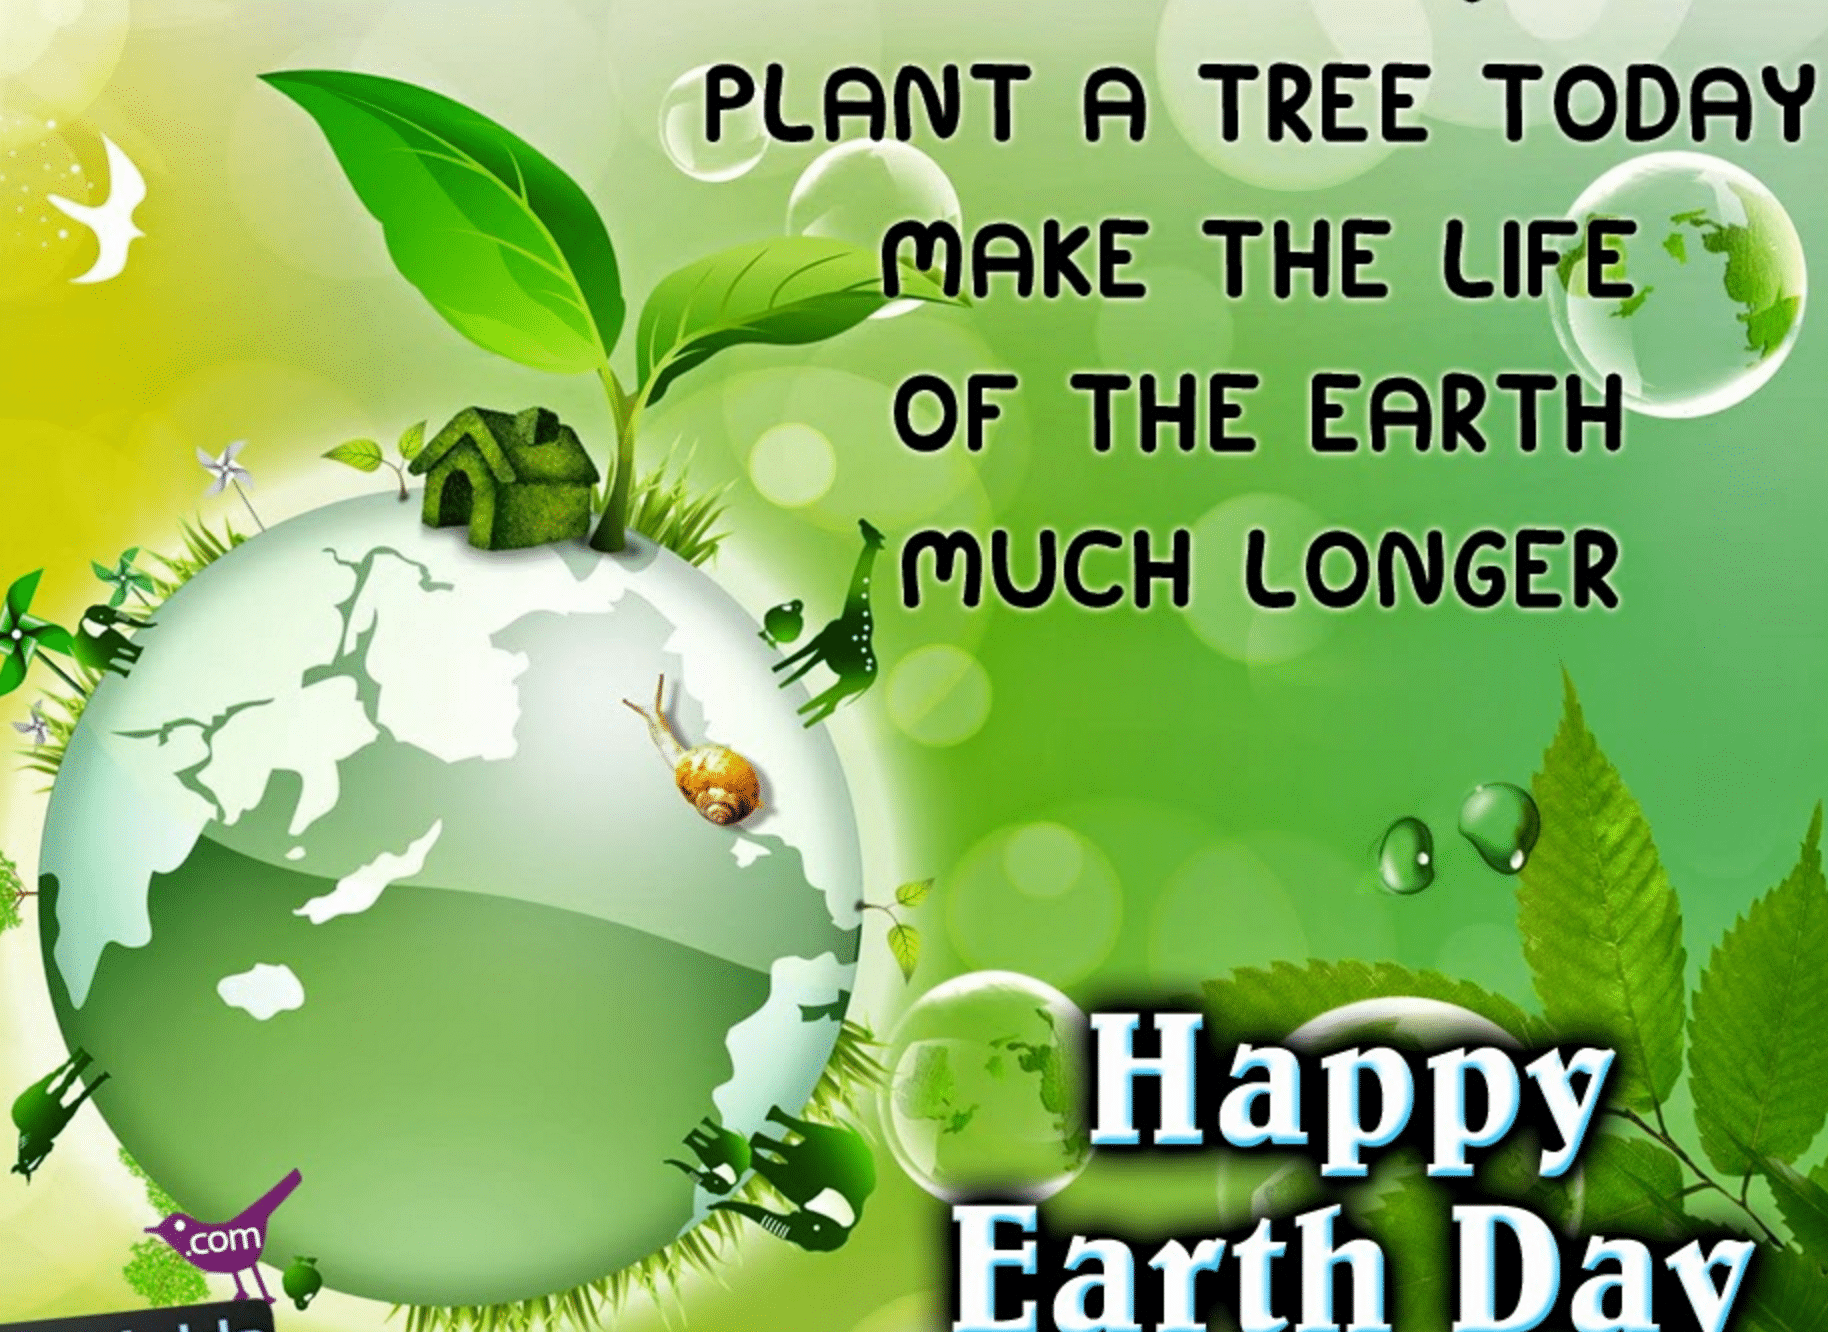 Earth Day Essay